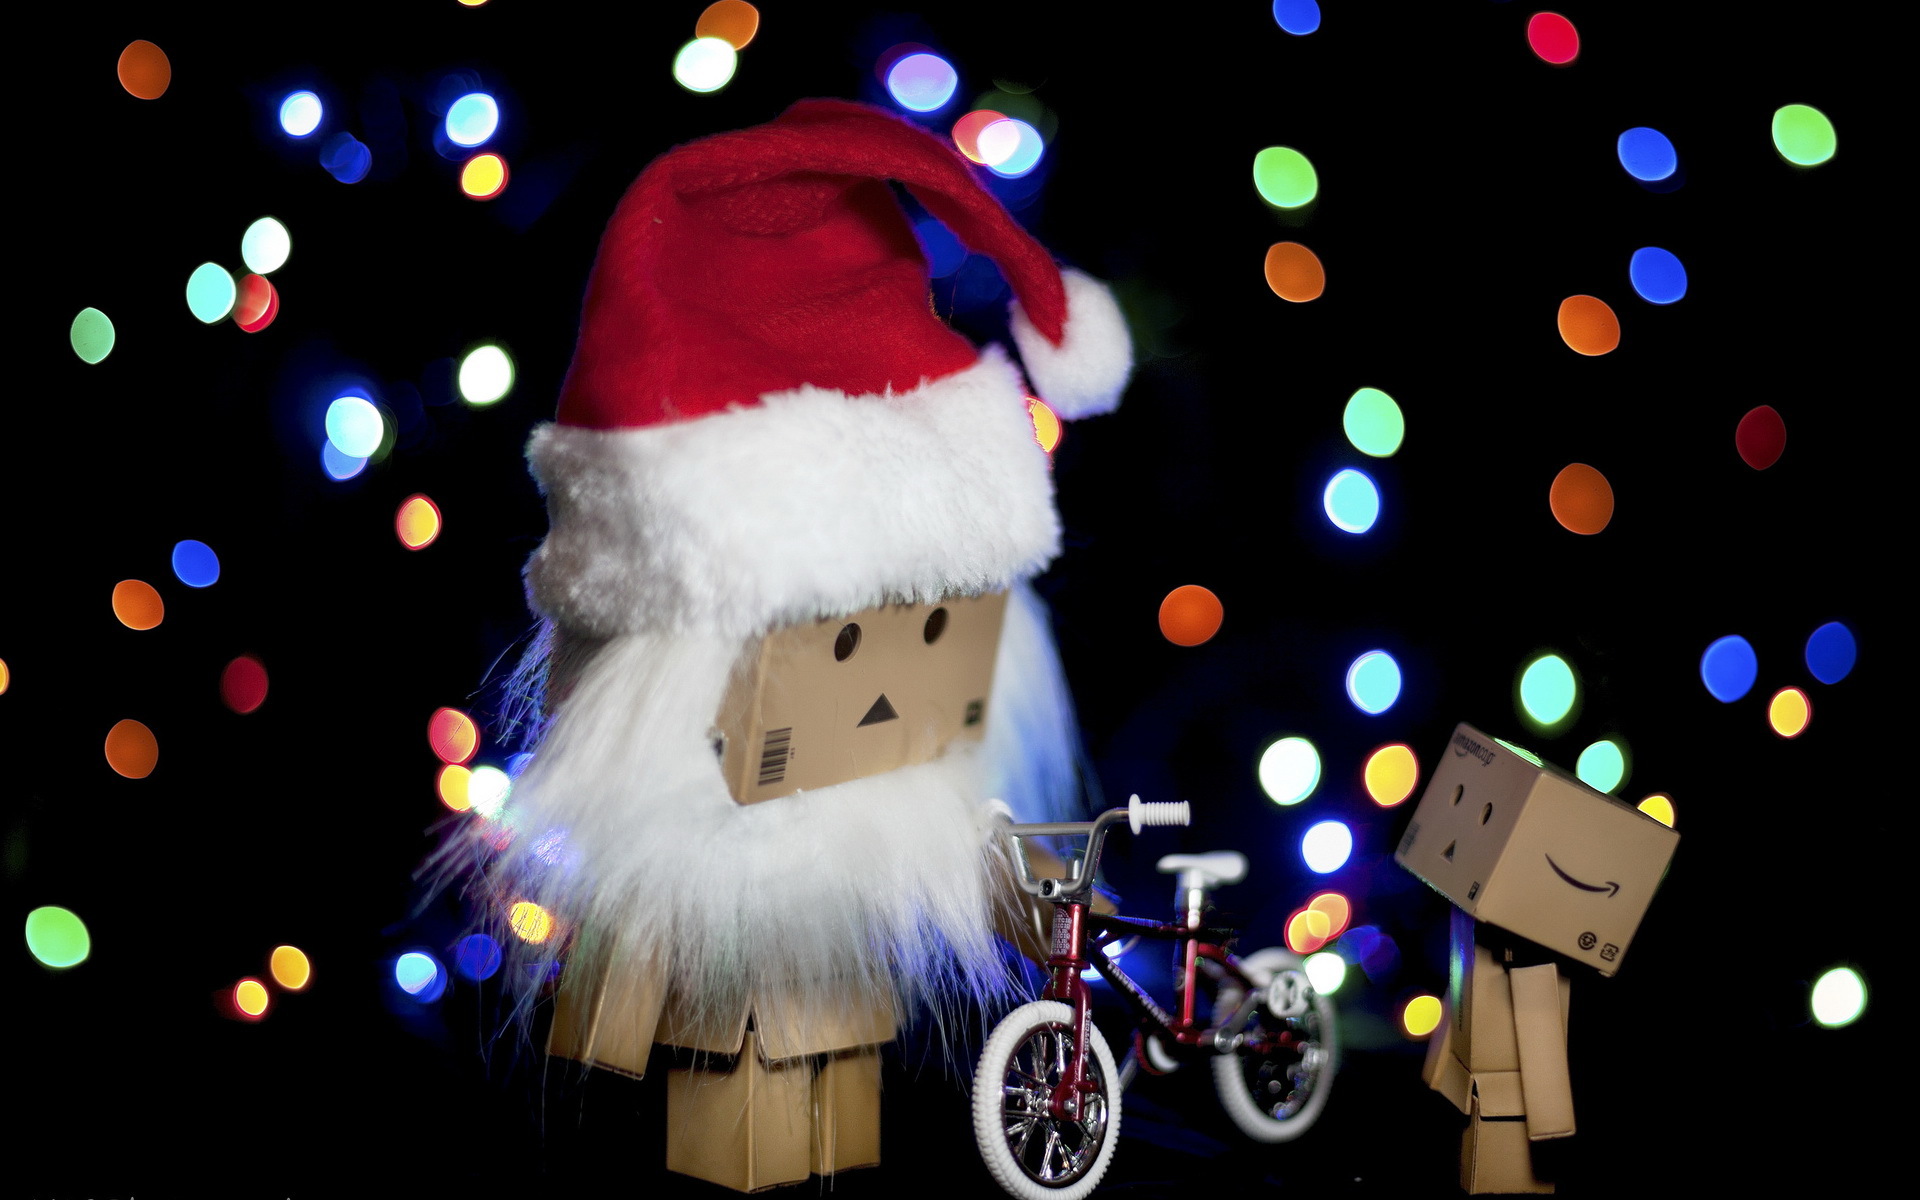 Картинки Рождество Amazon Велосипед Шапки Коробка Игрушки Праздники Новый год велосипеды велосипеде шапка в шапке коробки коробке игрушка